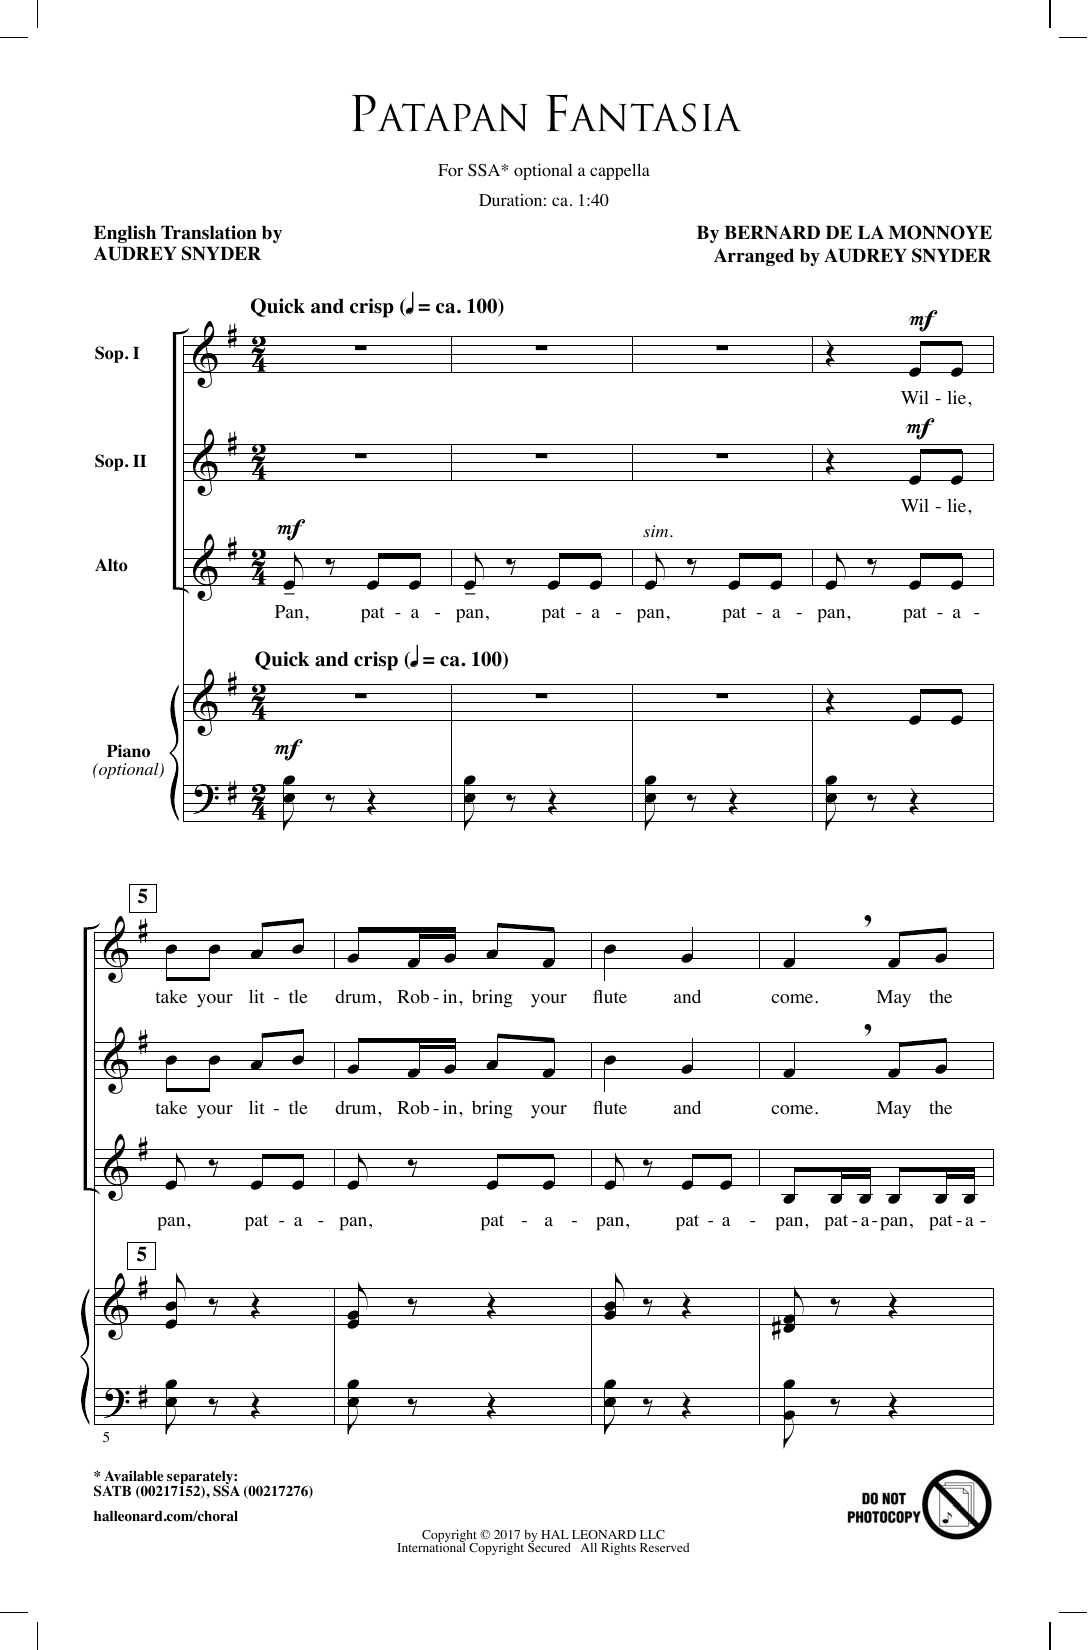 Audrey Snyder Patapan Fantasia Sheet Music Notes & Chords for SATB - Download or Print PDF